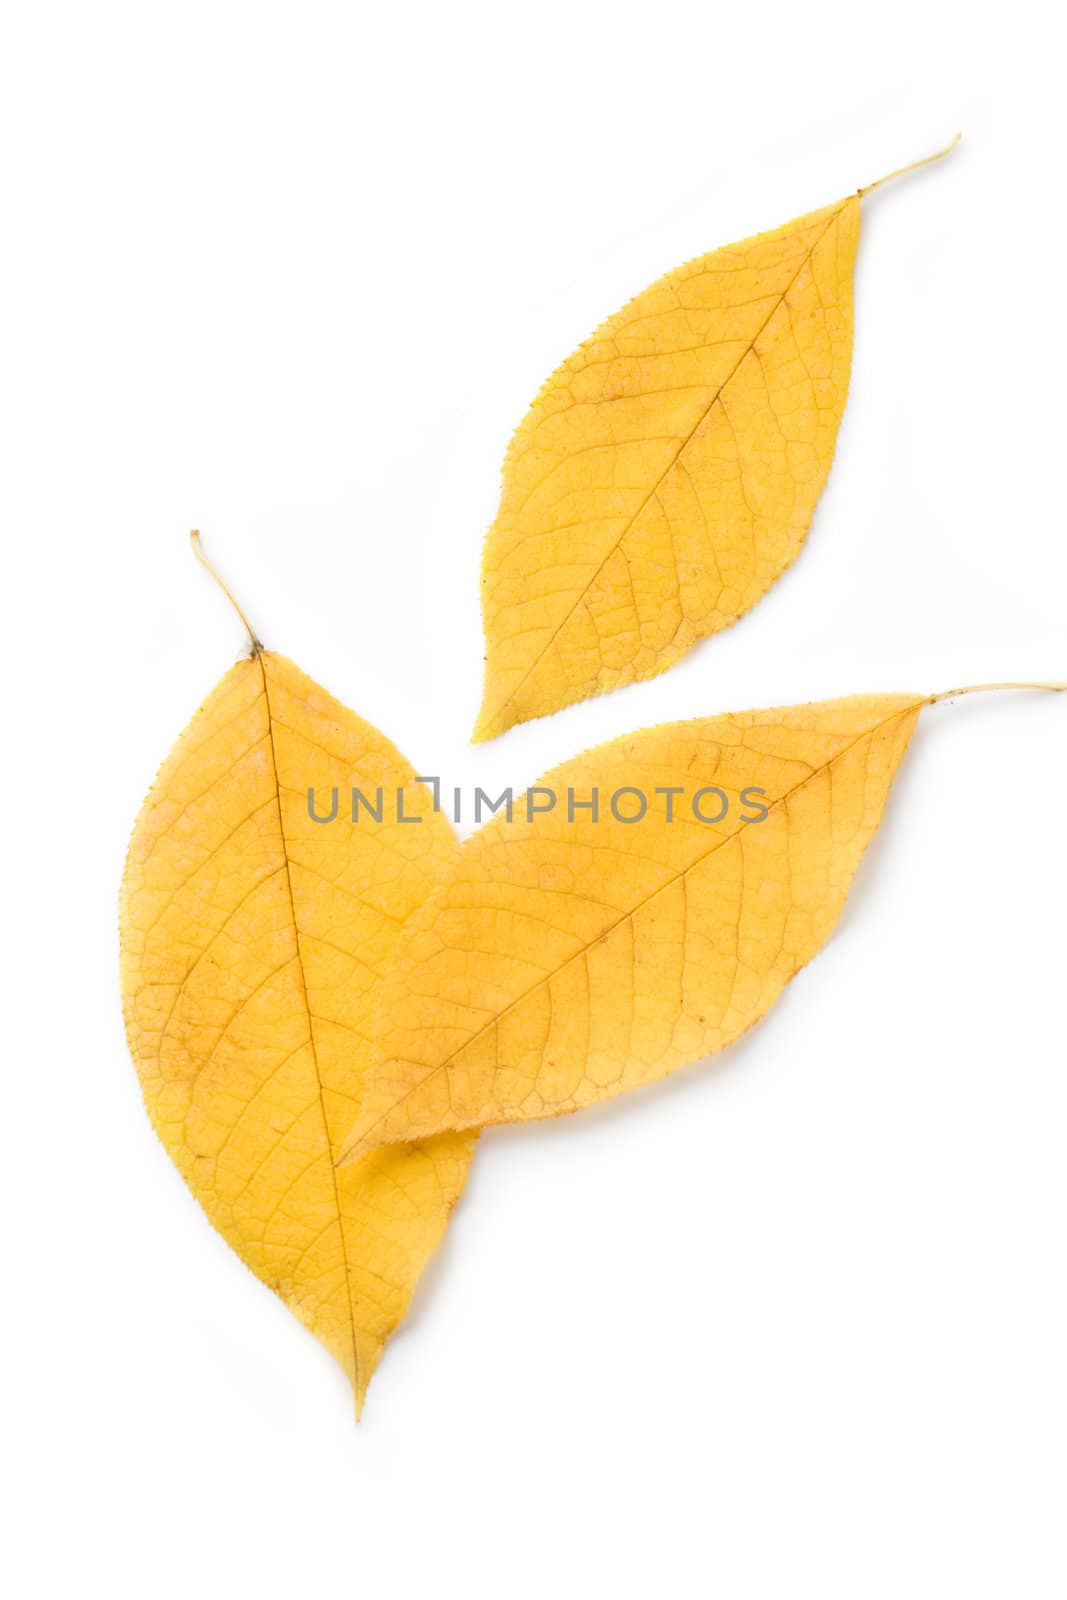 Leaf isolated on white background by Garsya